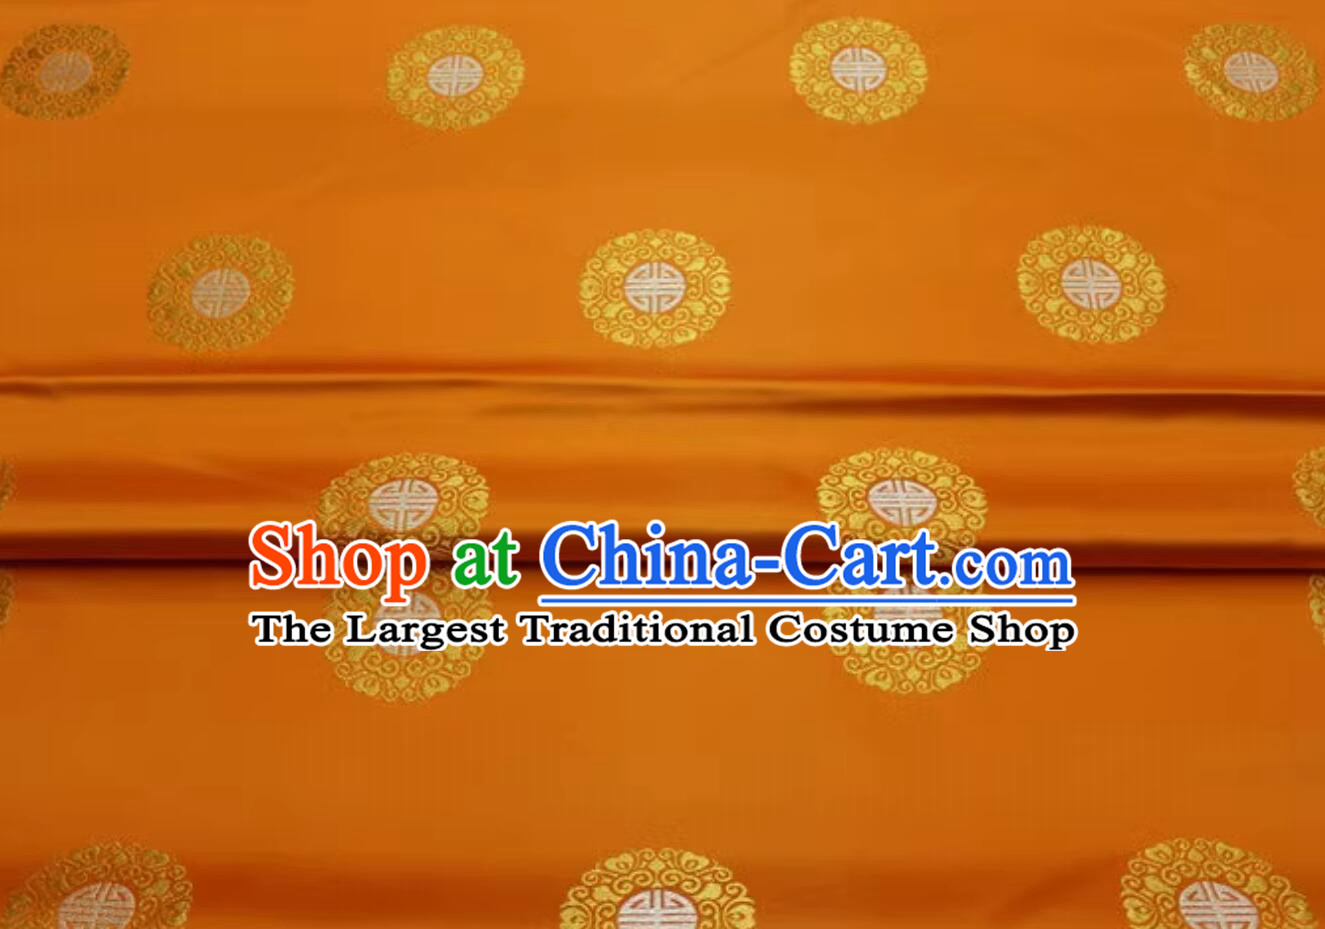 Tibetan Robe Cloth Asian Traditional Satin Material Chinese Royal Lucky Pattern Design Orange Brocade Fabric